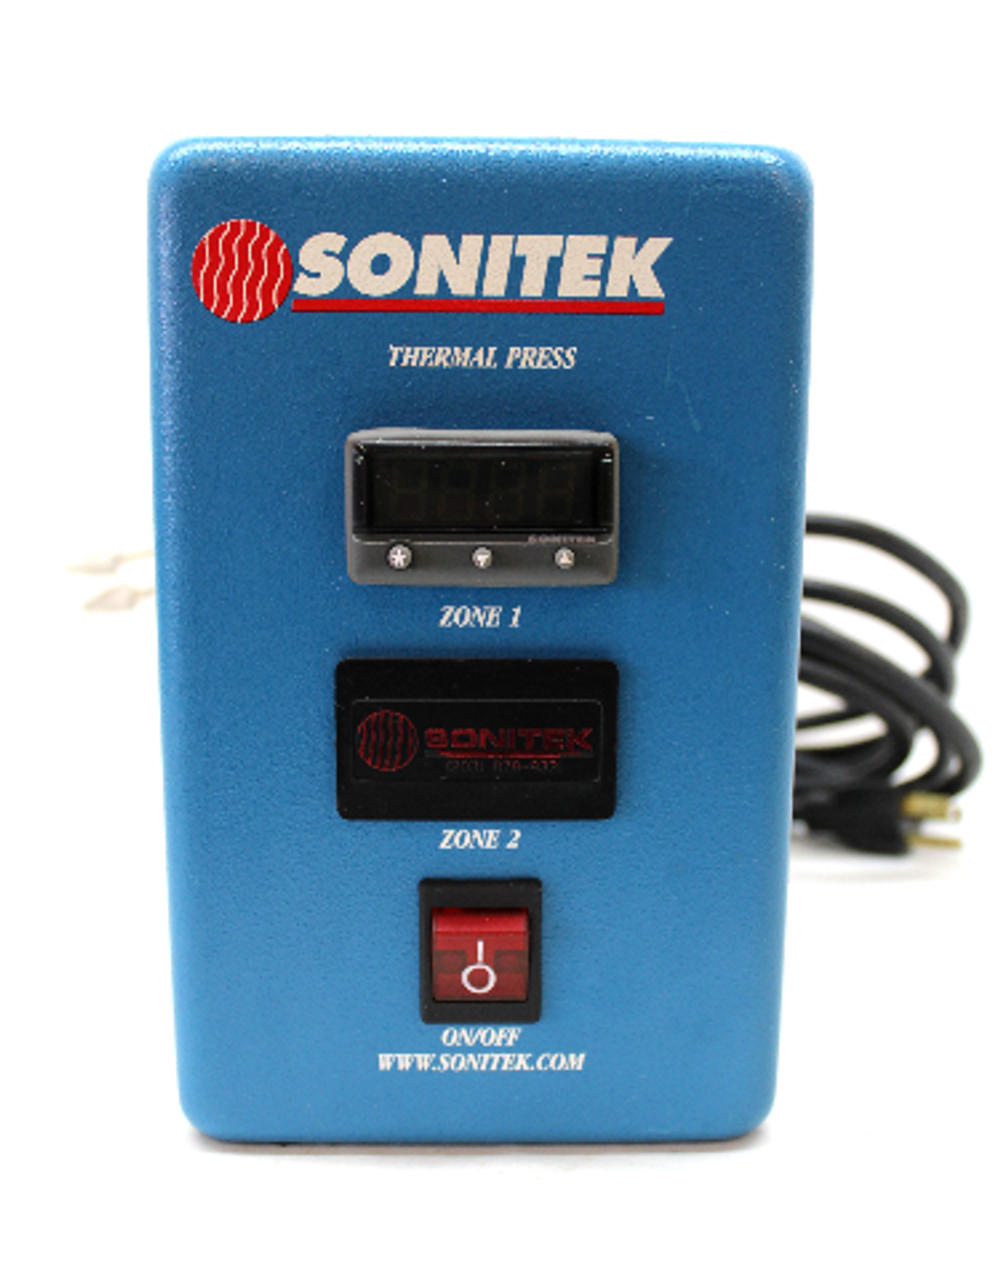 Sonitek Thermal Heat Press Controller LT-3, 032712-4, 120V, 15A